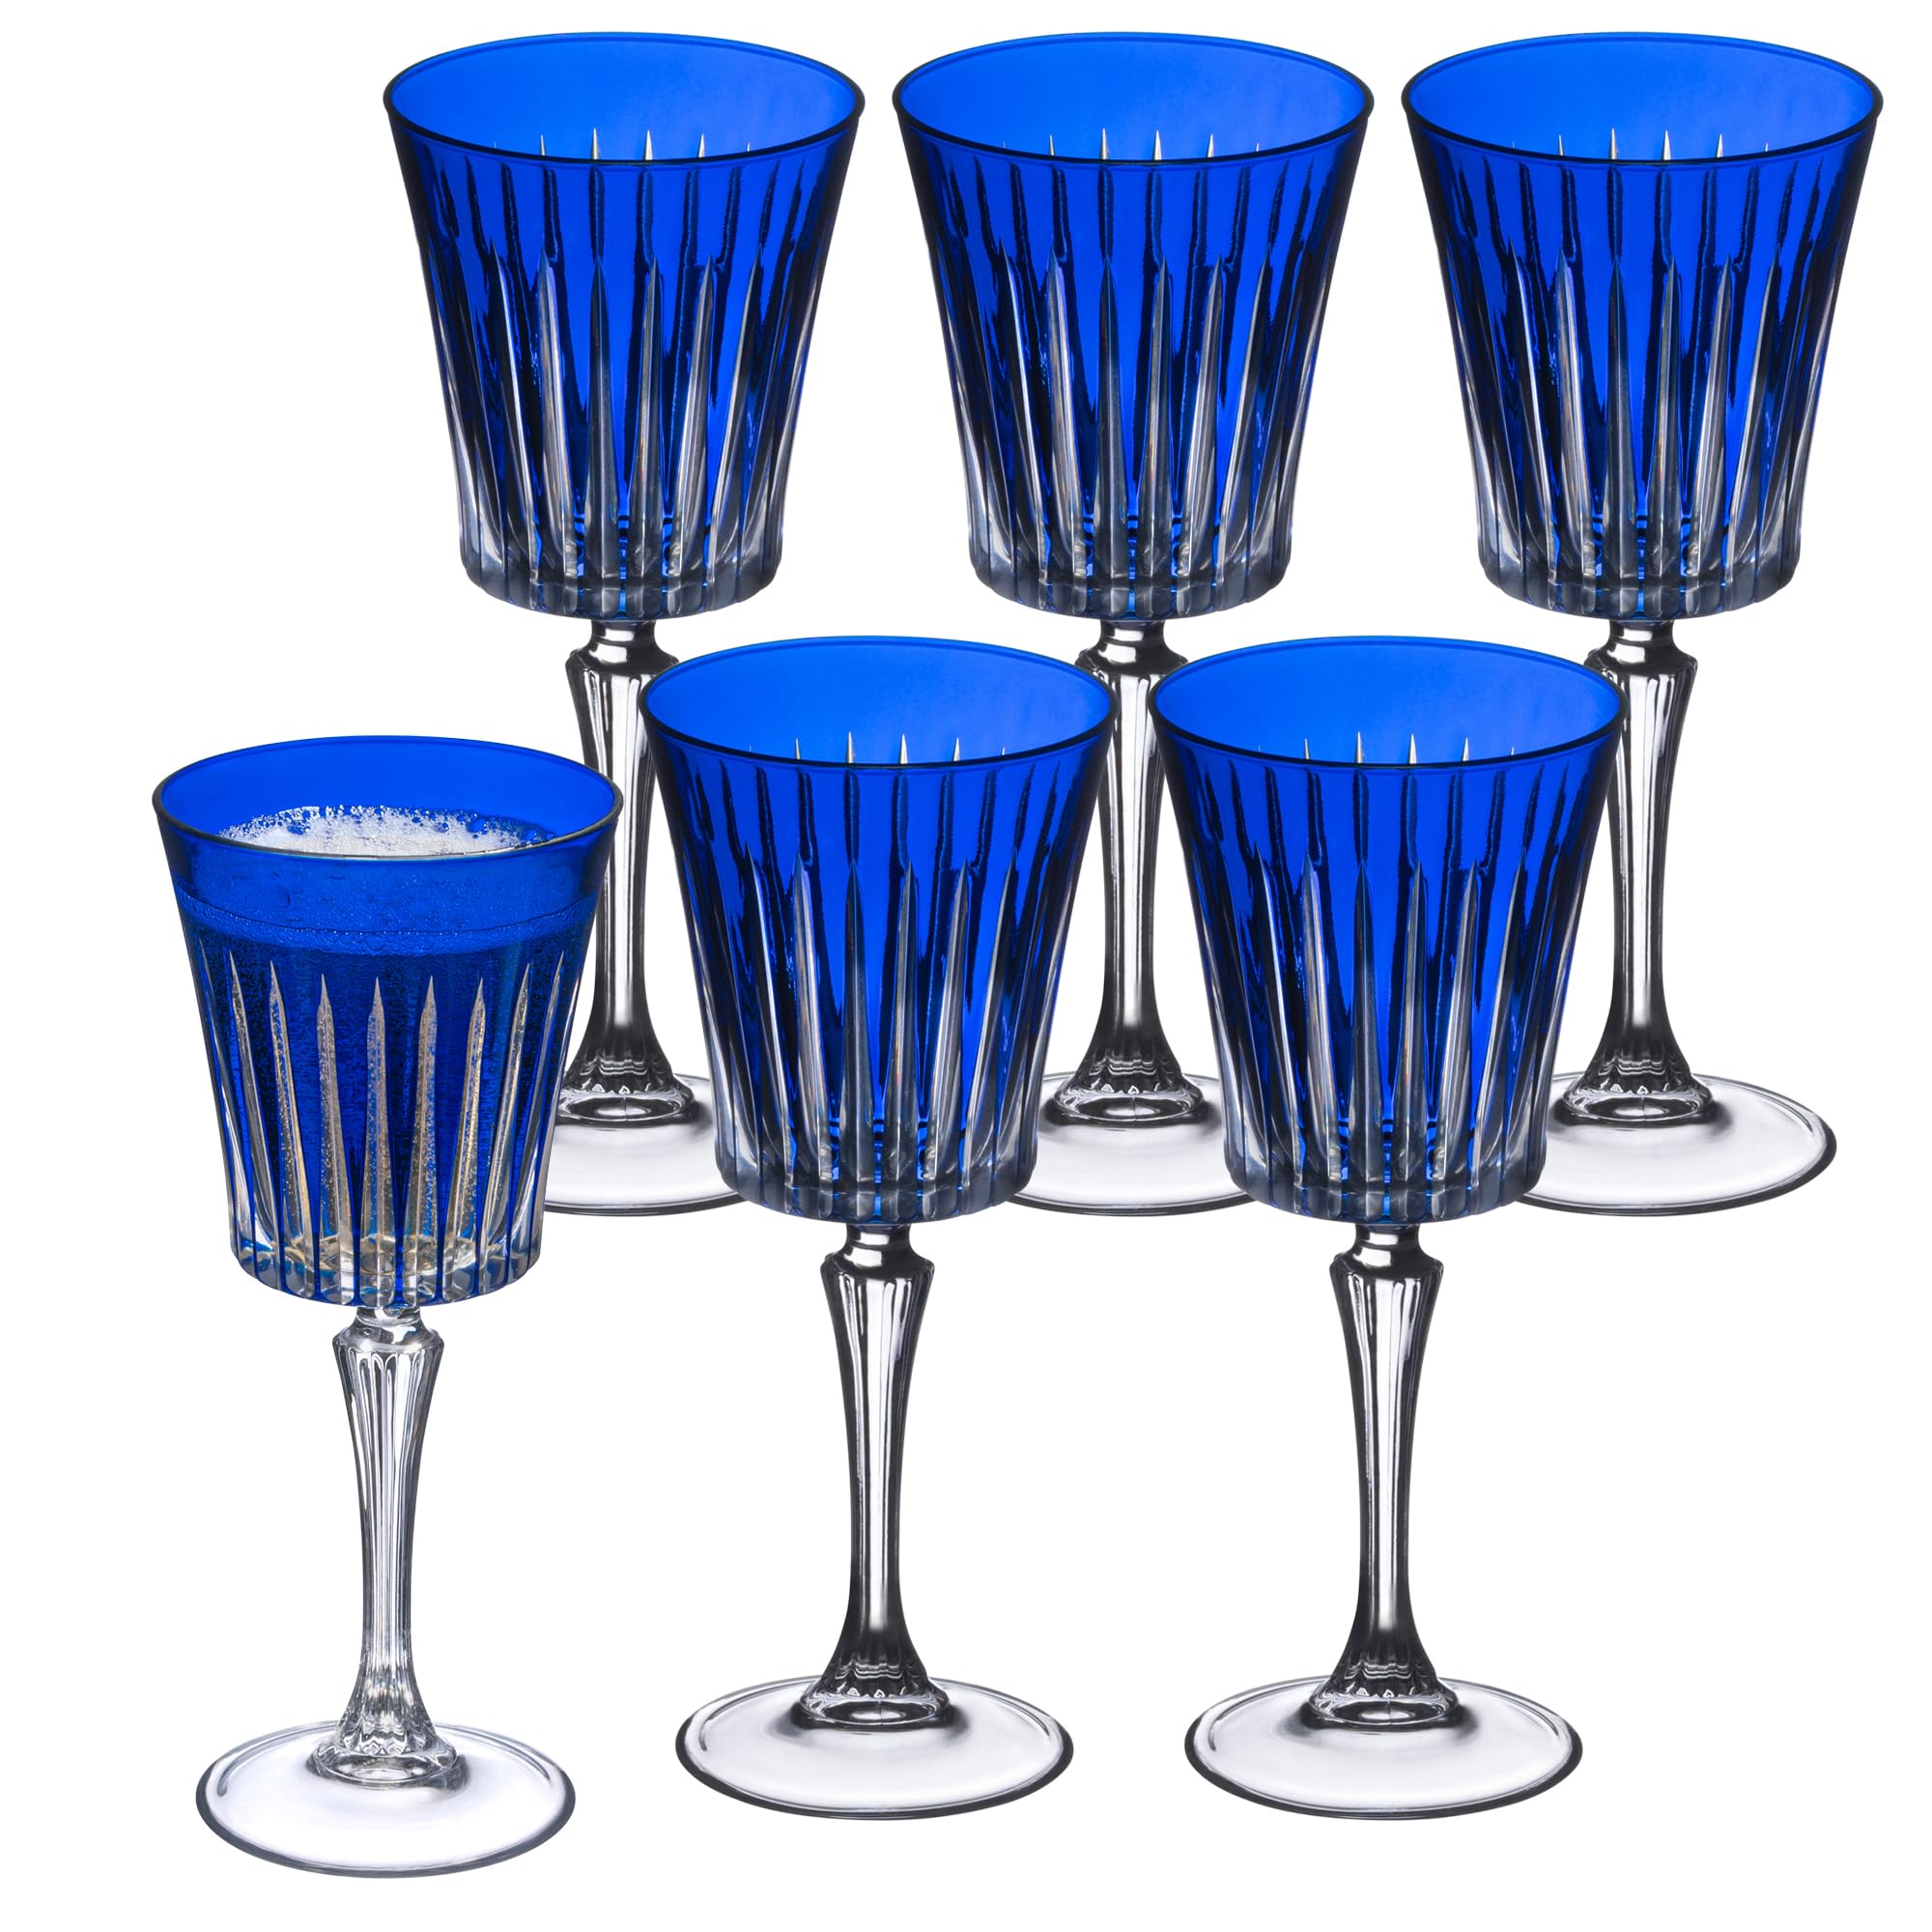 Barski European Colored Wine Glasses - Set of 6 Wine Goblets for Red Wine or White Wine - Elegant Colored Glassware Water Goblets - Gift Ready Colored Stemware, Colorful Glasses, 10 oz, Cobalt (Blue).